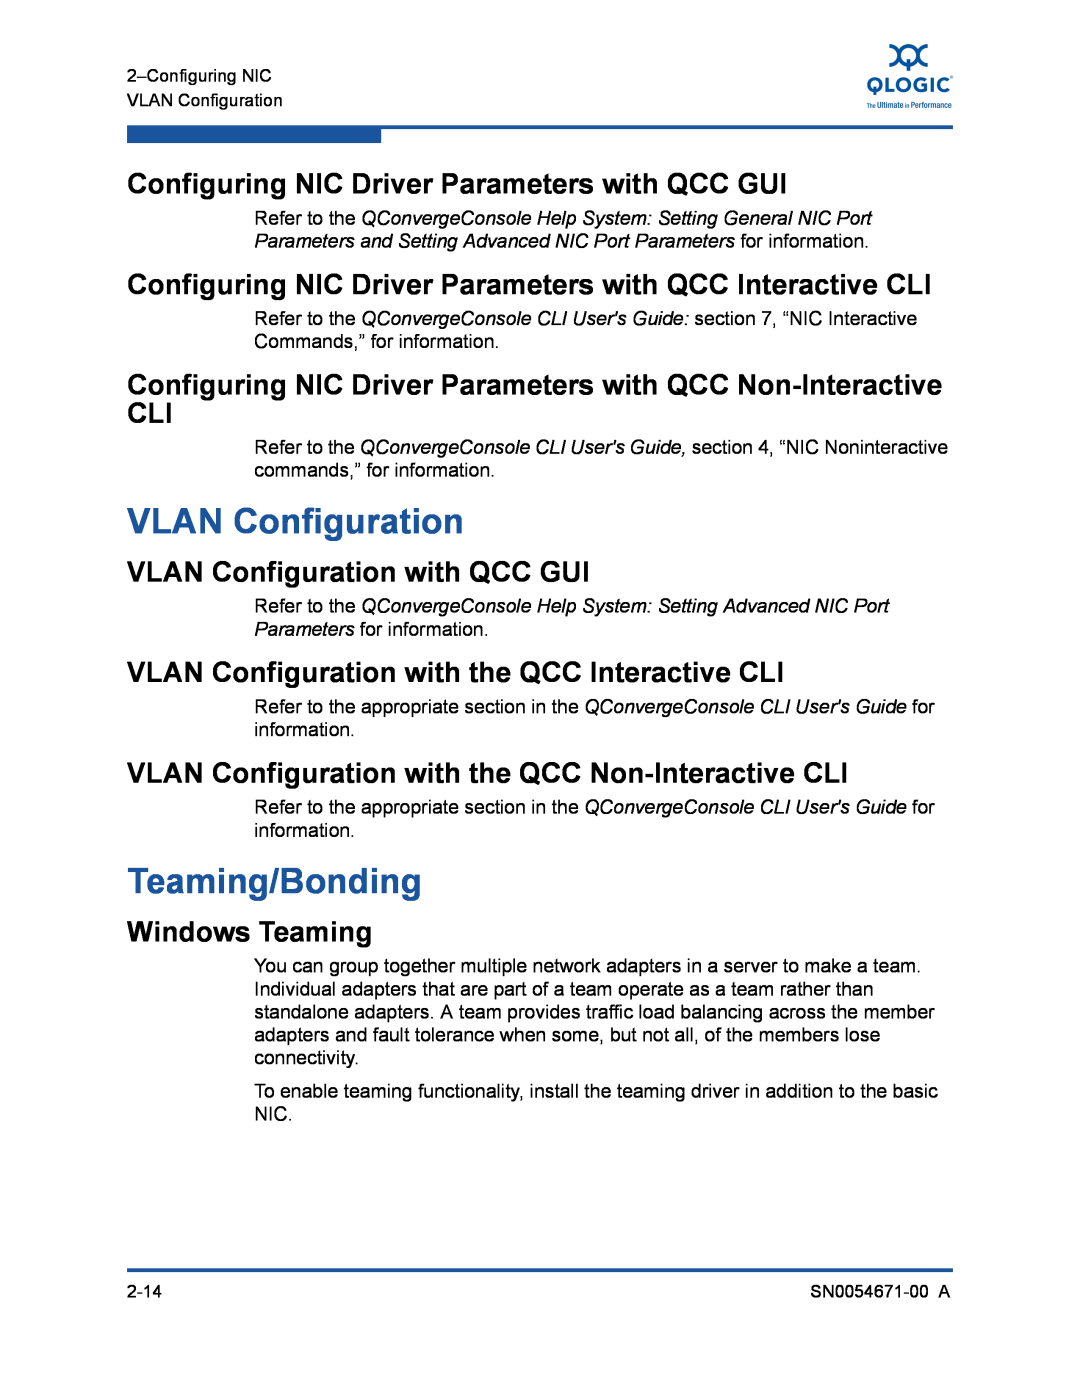 Q-Logic 8200, 3200 VLAN Configuration, Teaming/Bonding, Configuring NIC Driver Parameters with QCC GUI, Windows Teaming 